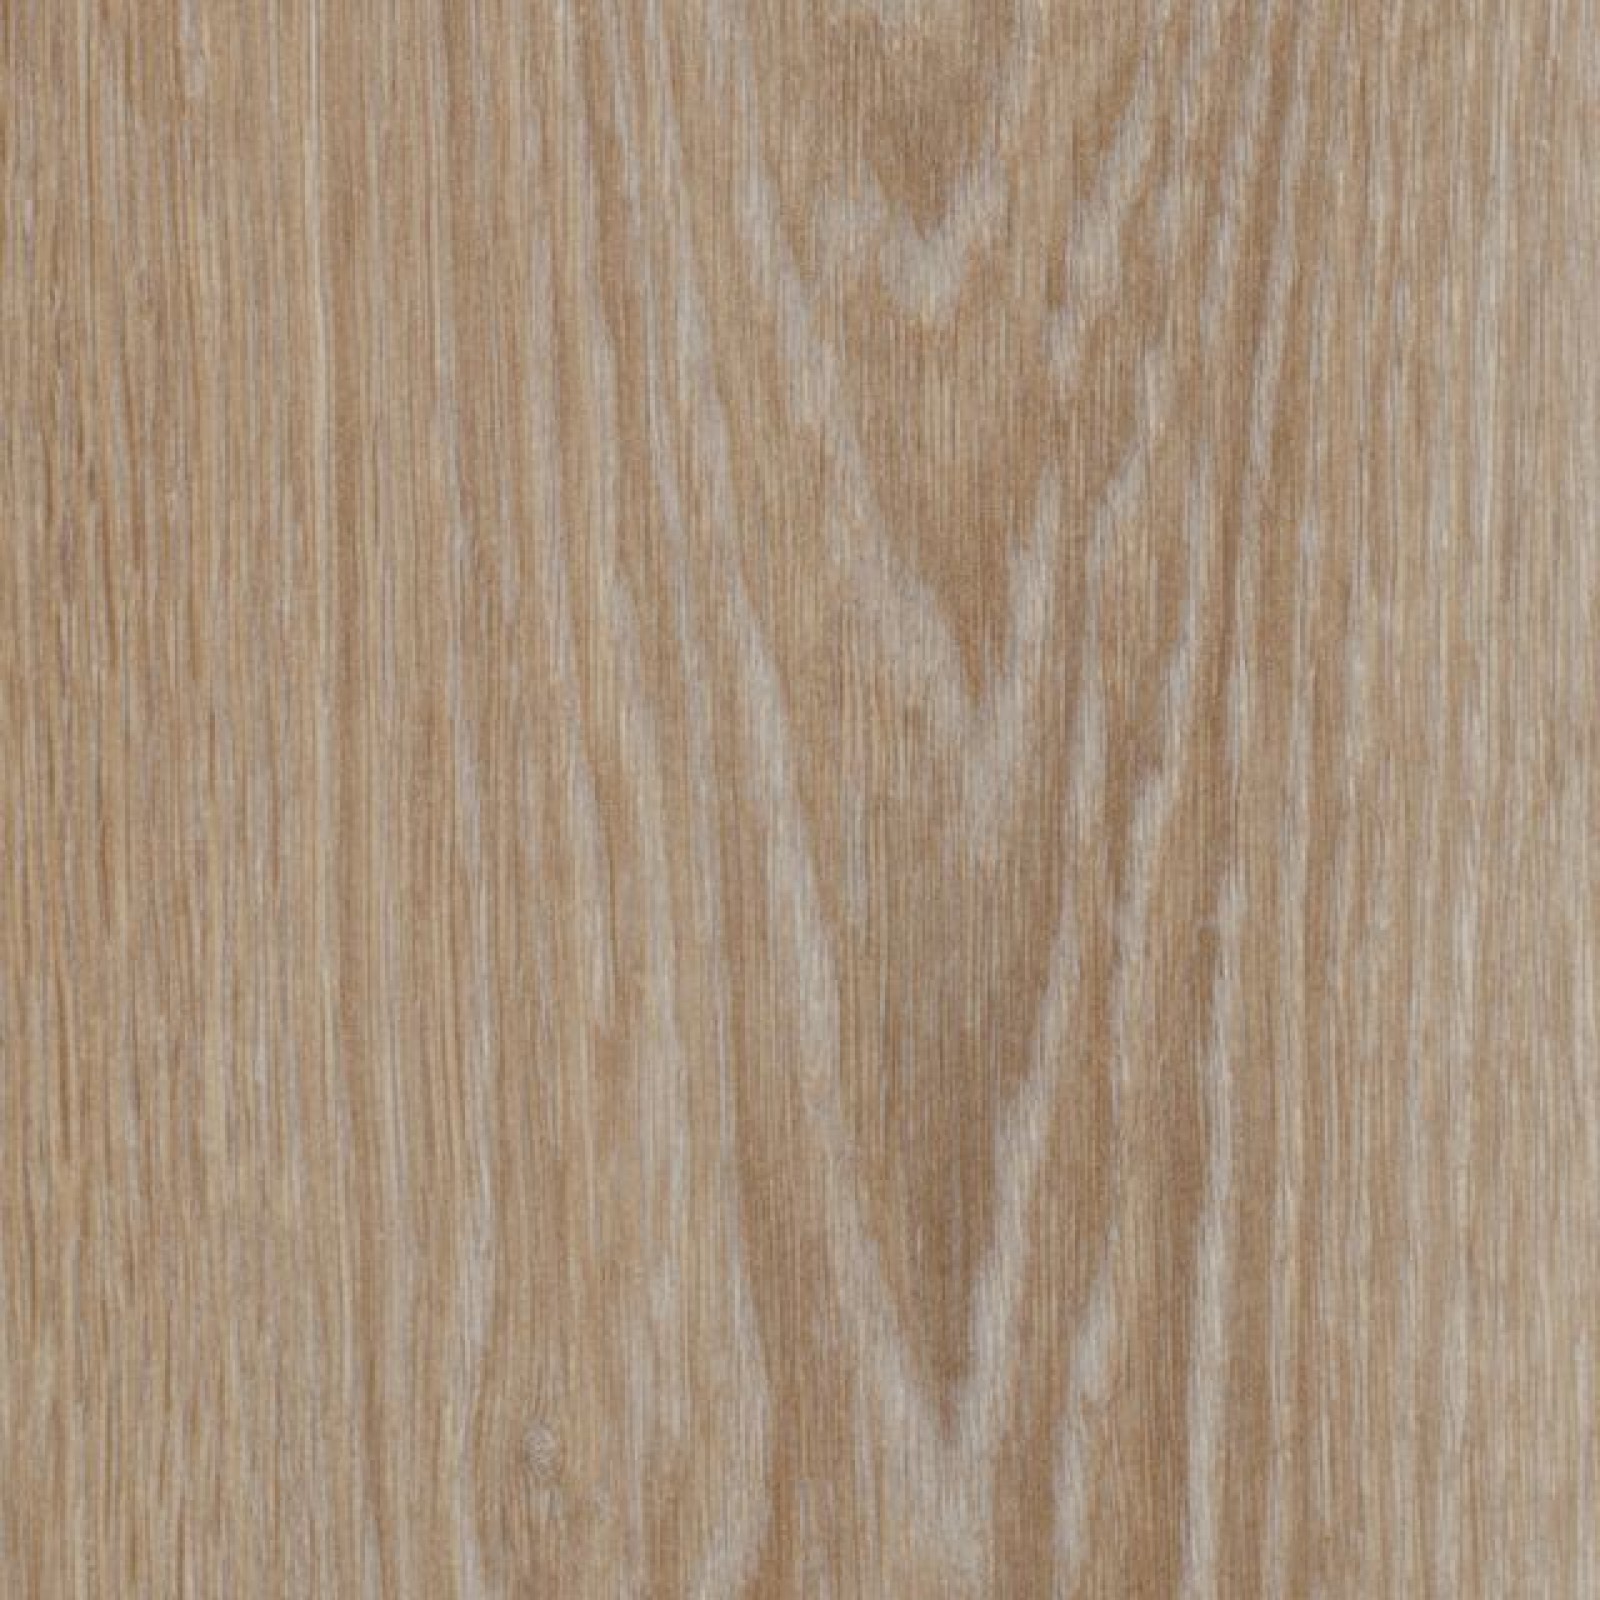 Vzor - 63412DR blond timber (120x20cm)